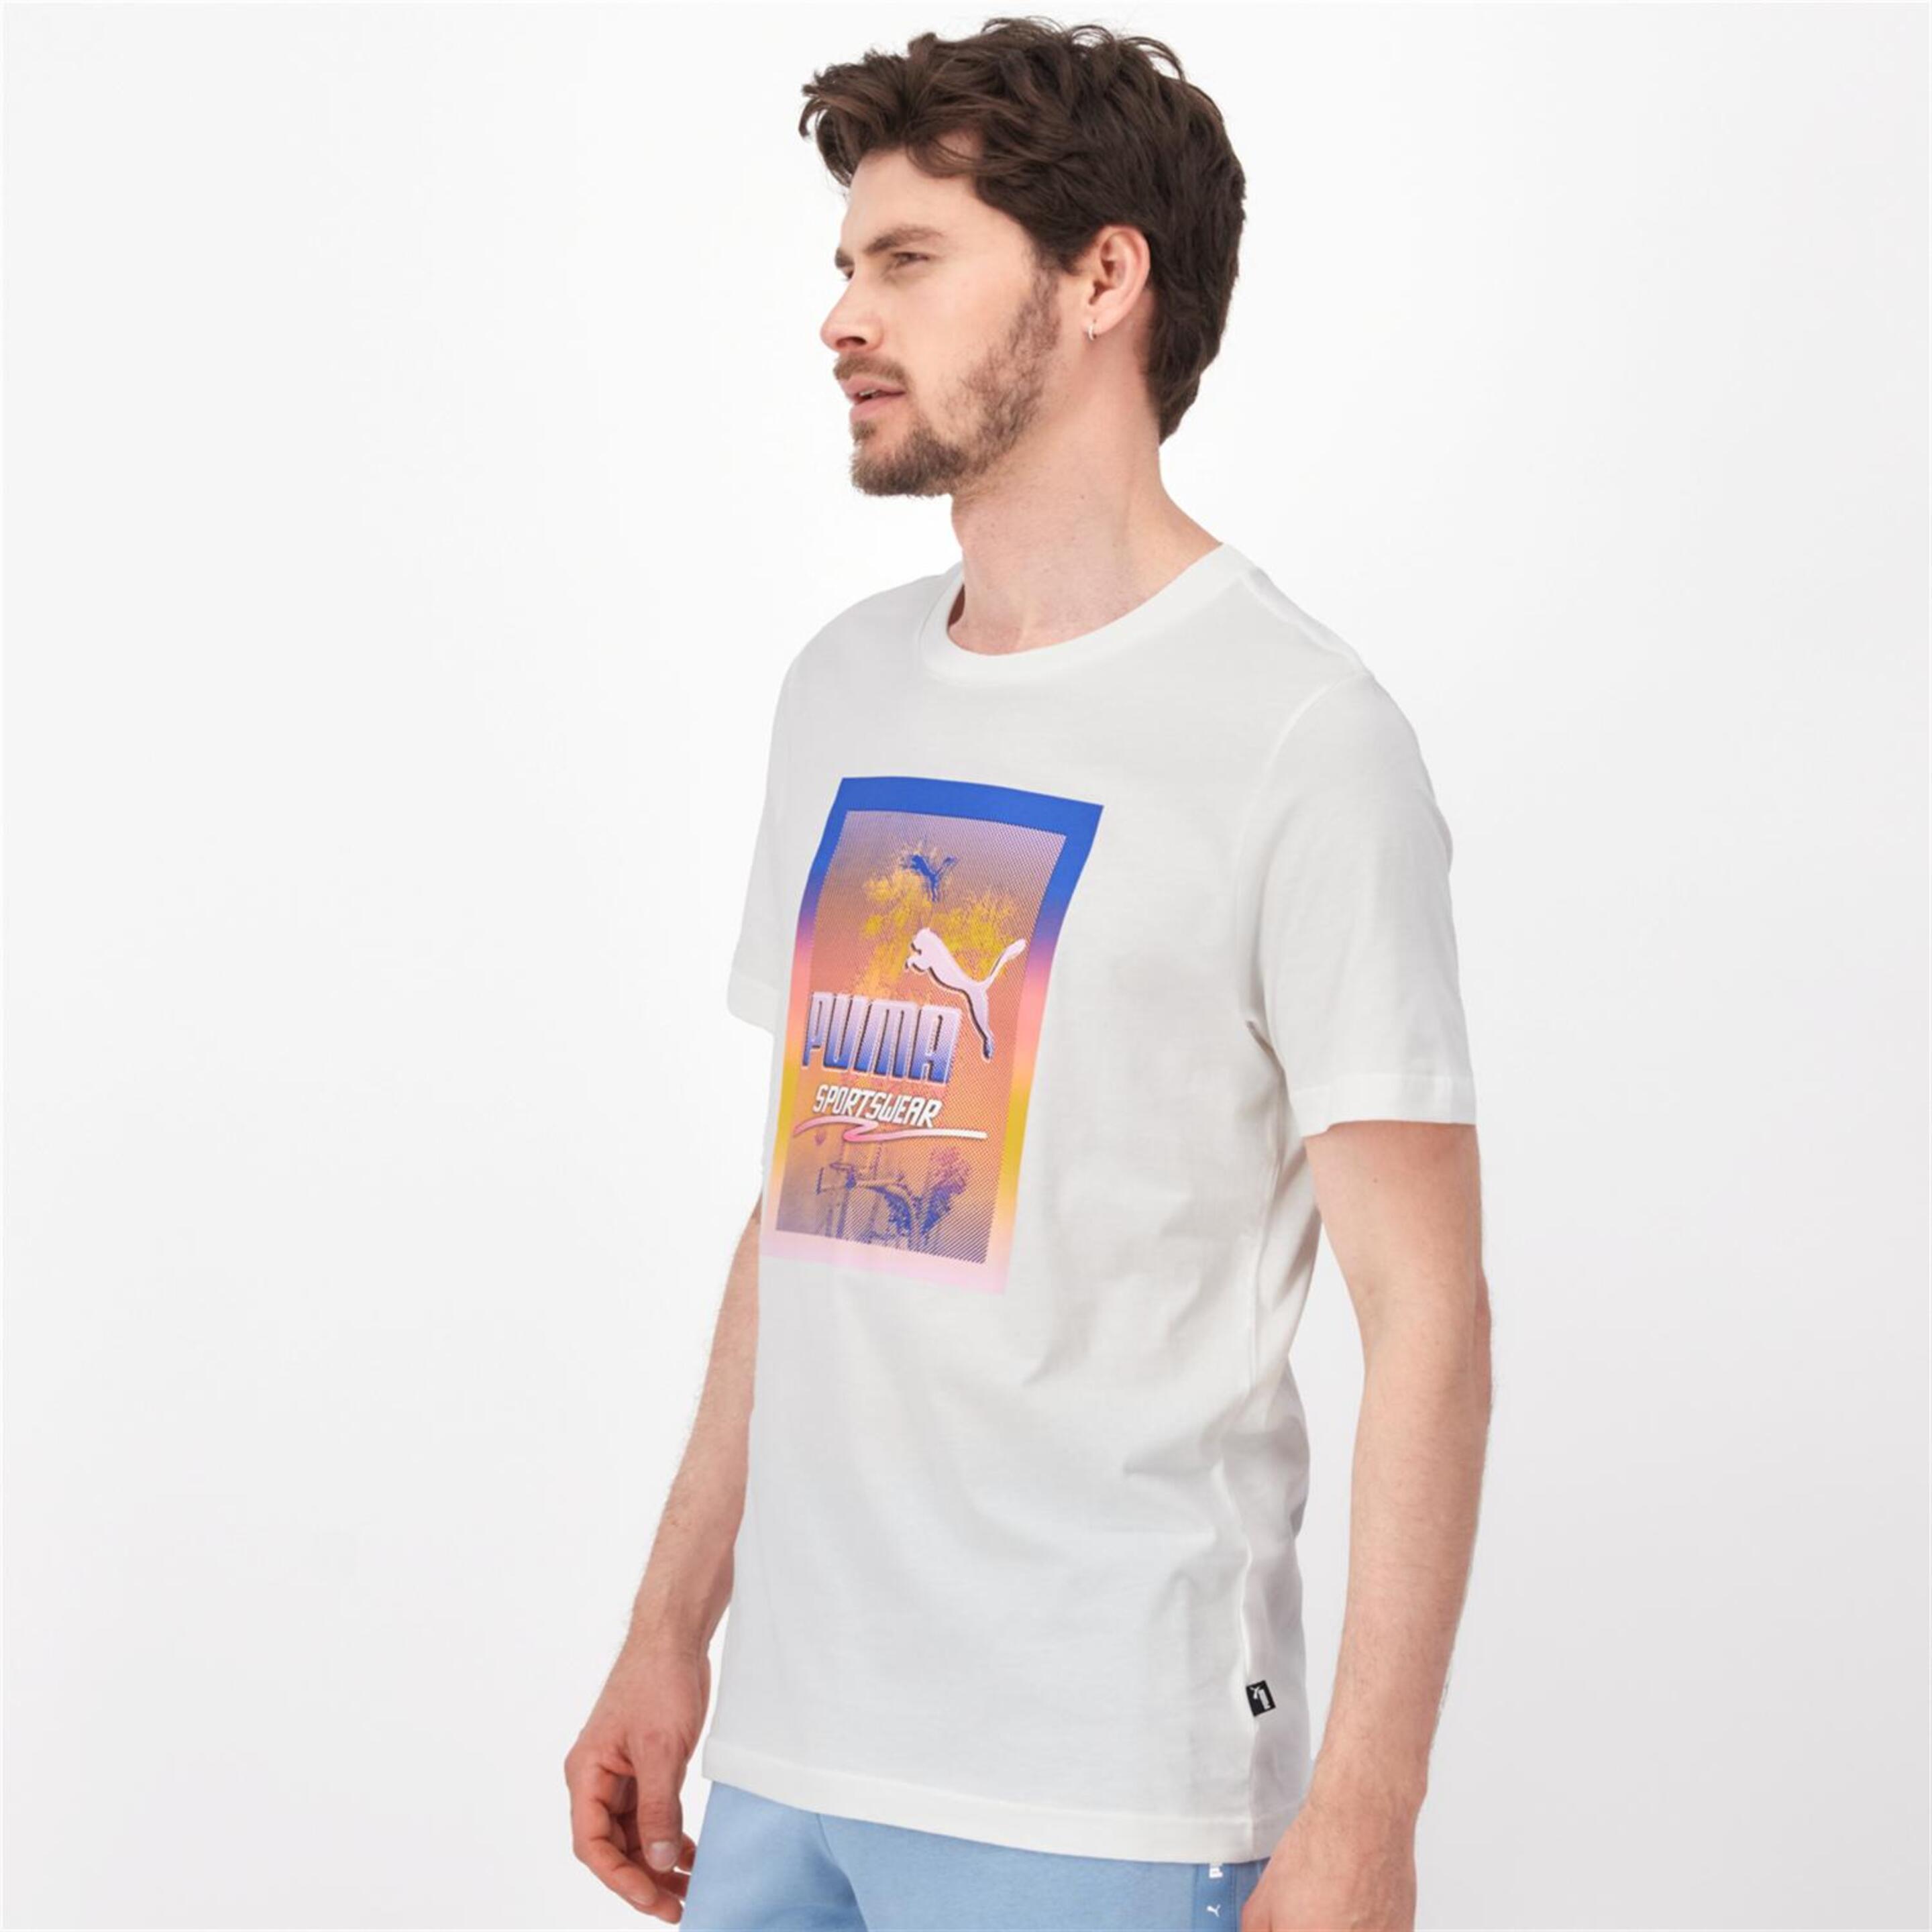 Puma Graphics - Blanco - Camiseta Hombre